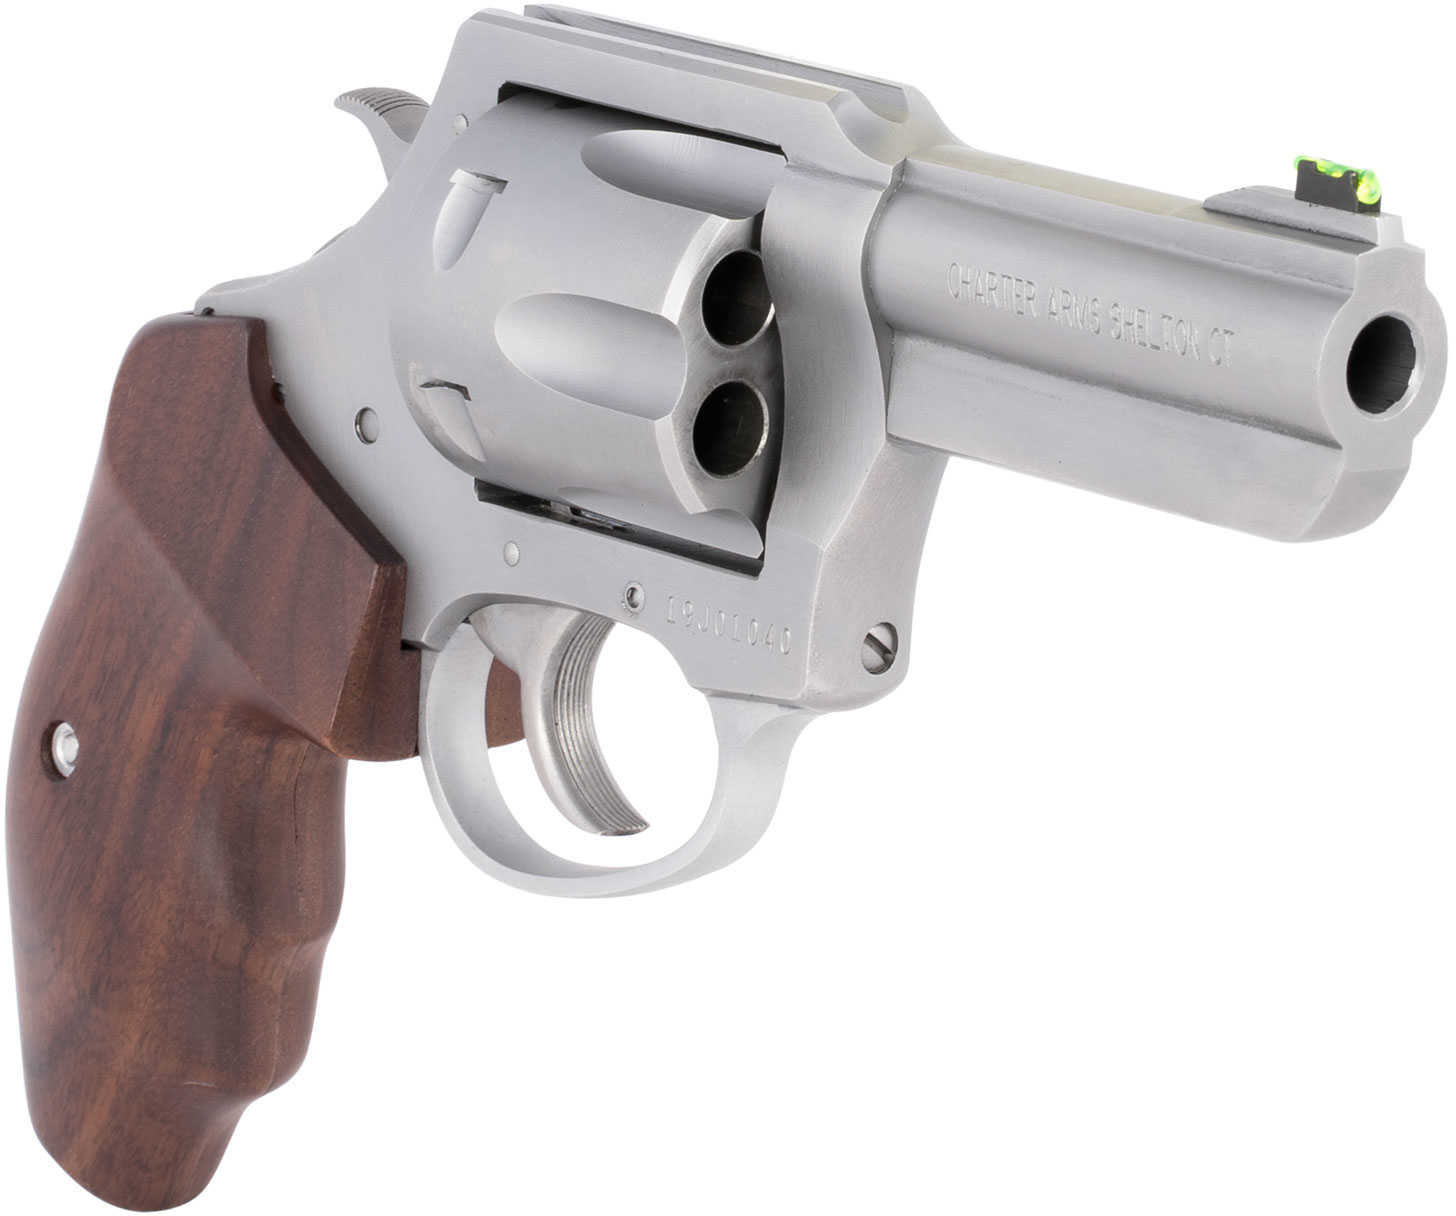 Charter Arms Professional V Revolver 357 Magnum 6 Shot 3" Barrel Stainless Steel Finish Wood Grips Fiber Optic Sight